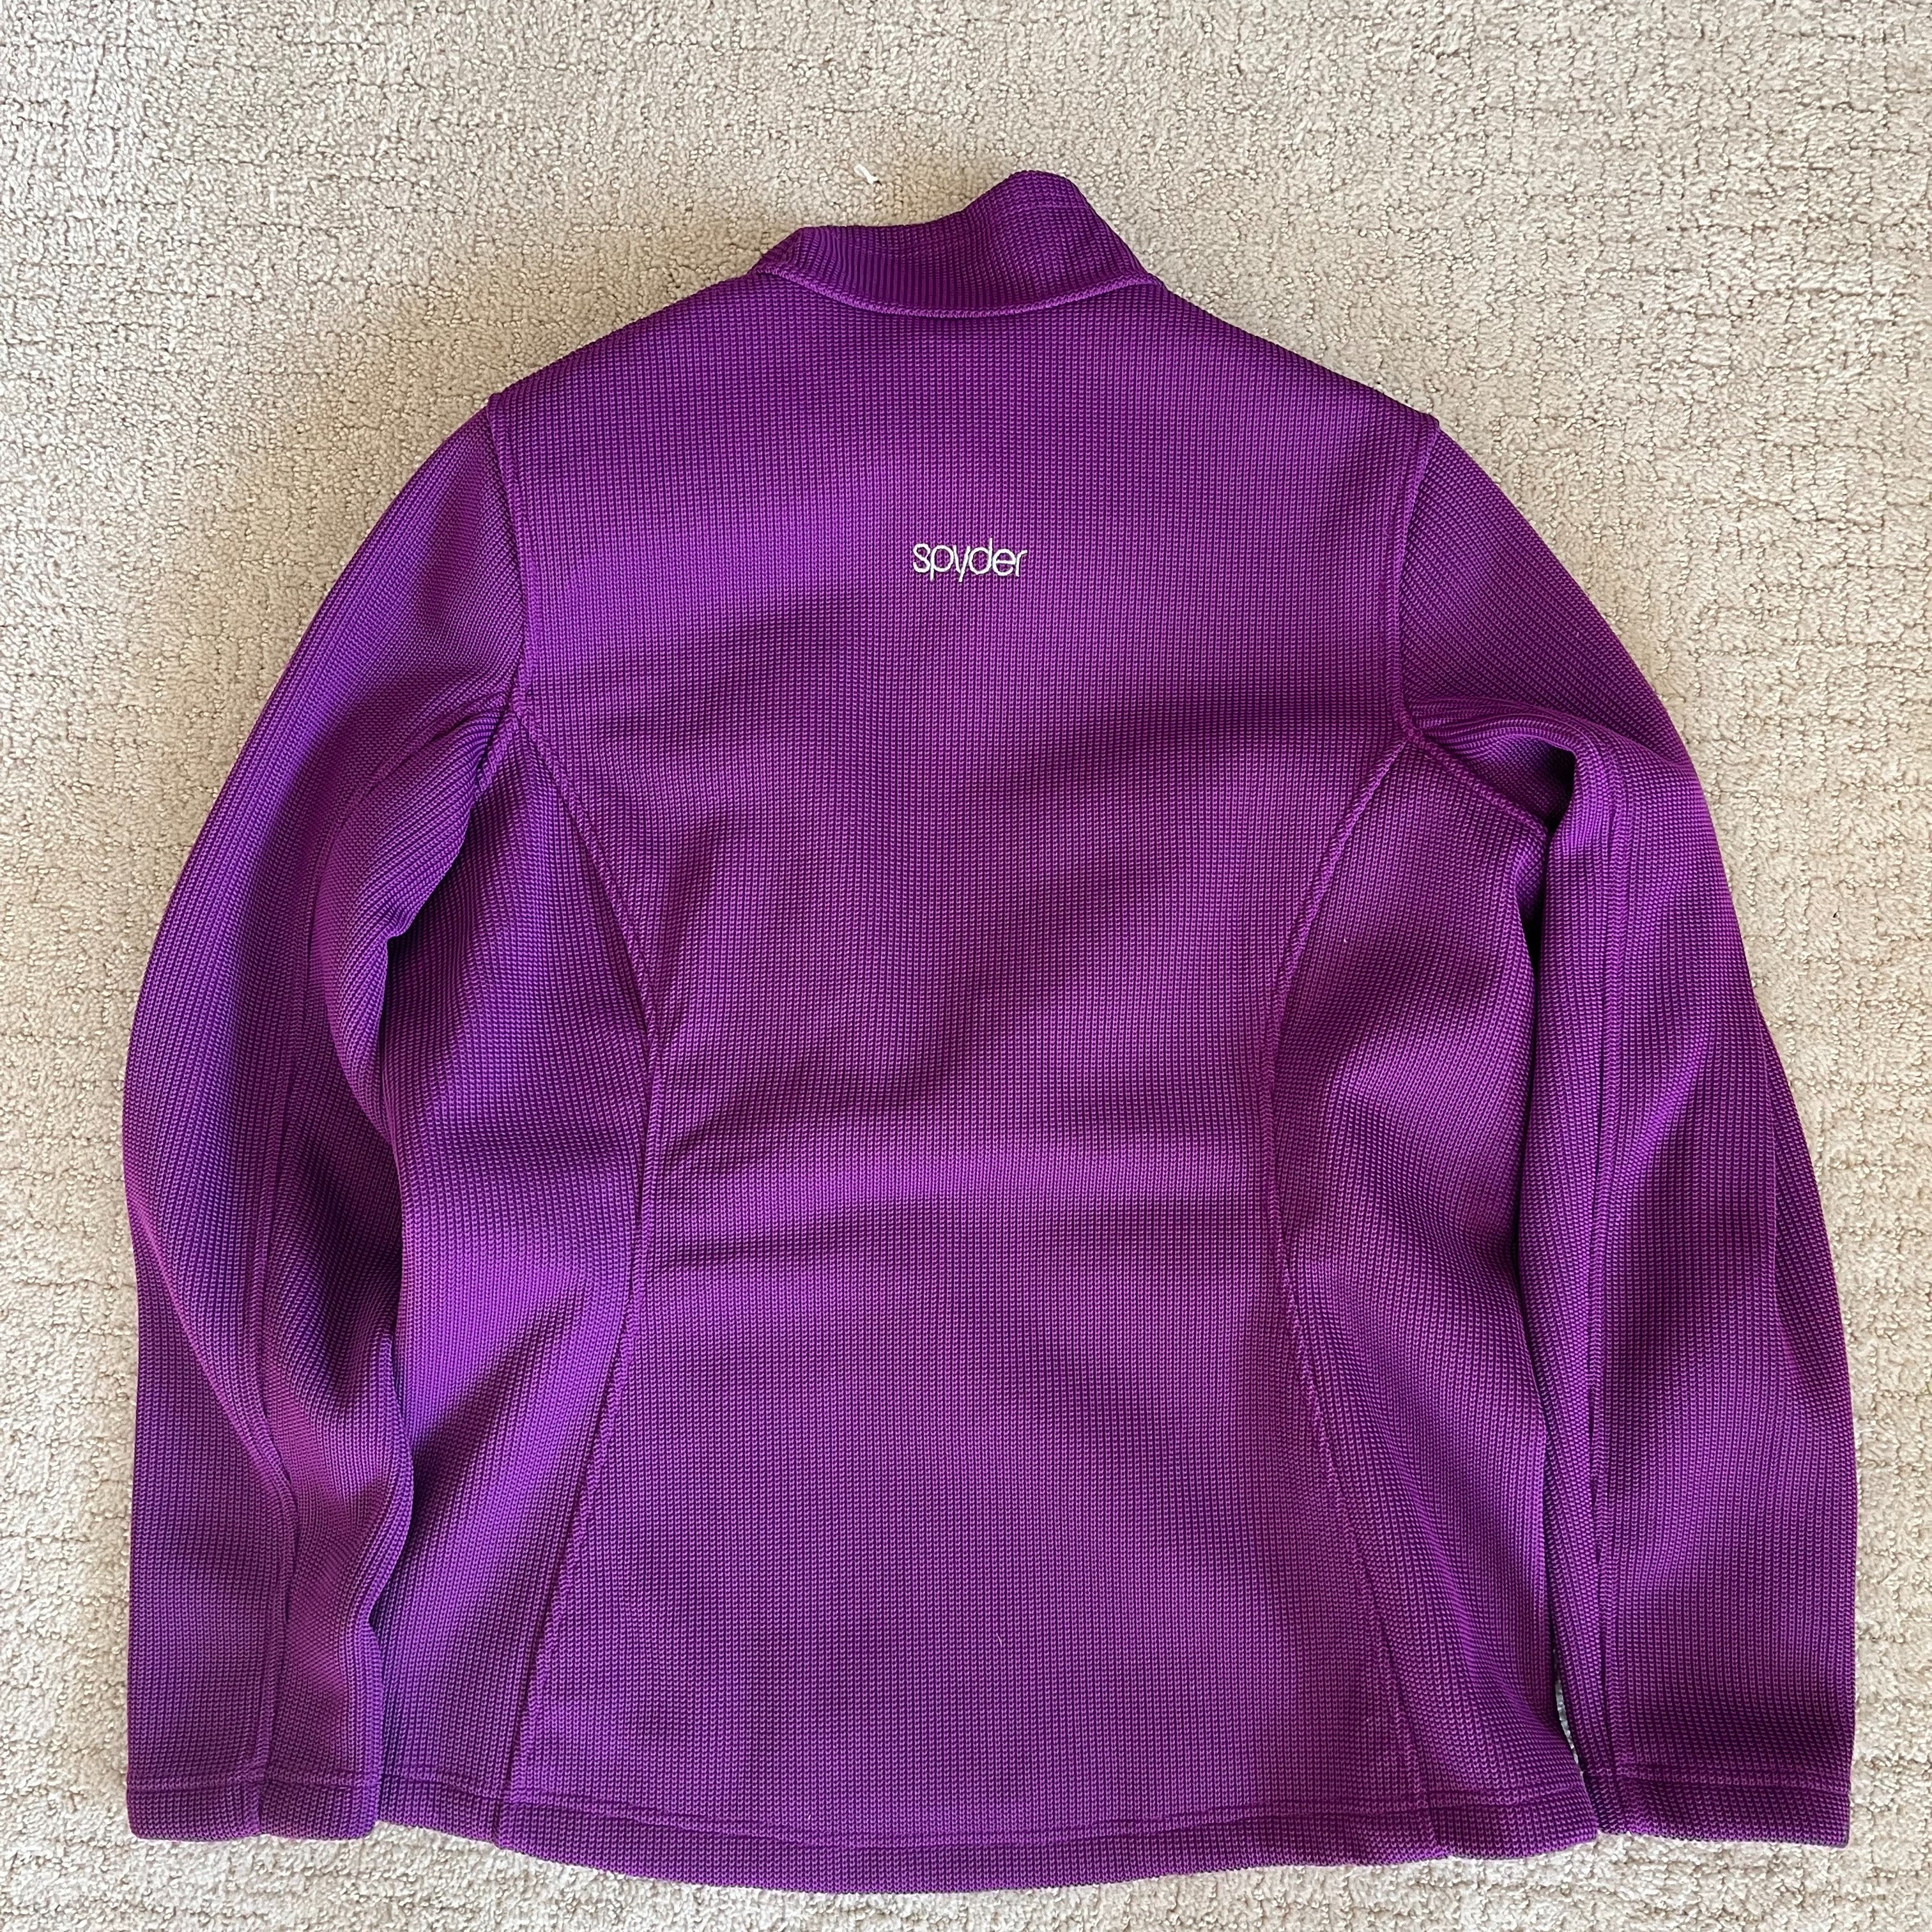 Spyder Women’s Pink Full-Zip Activewear Sweater Size L